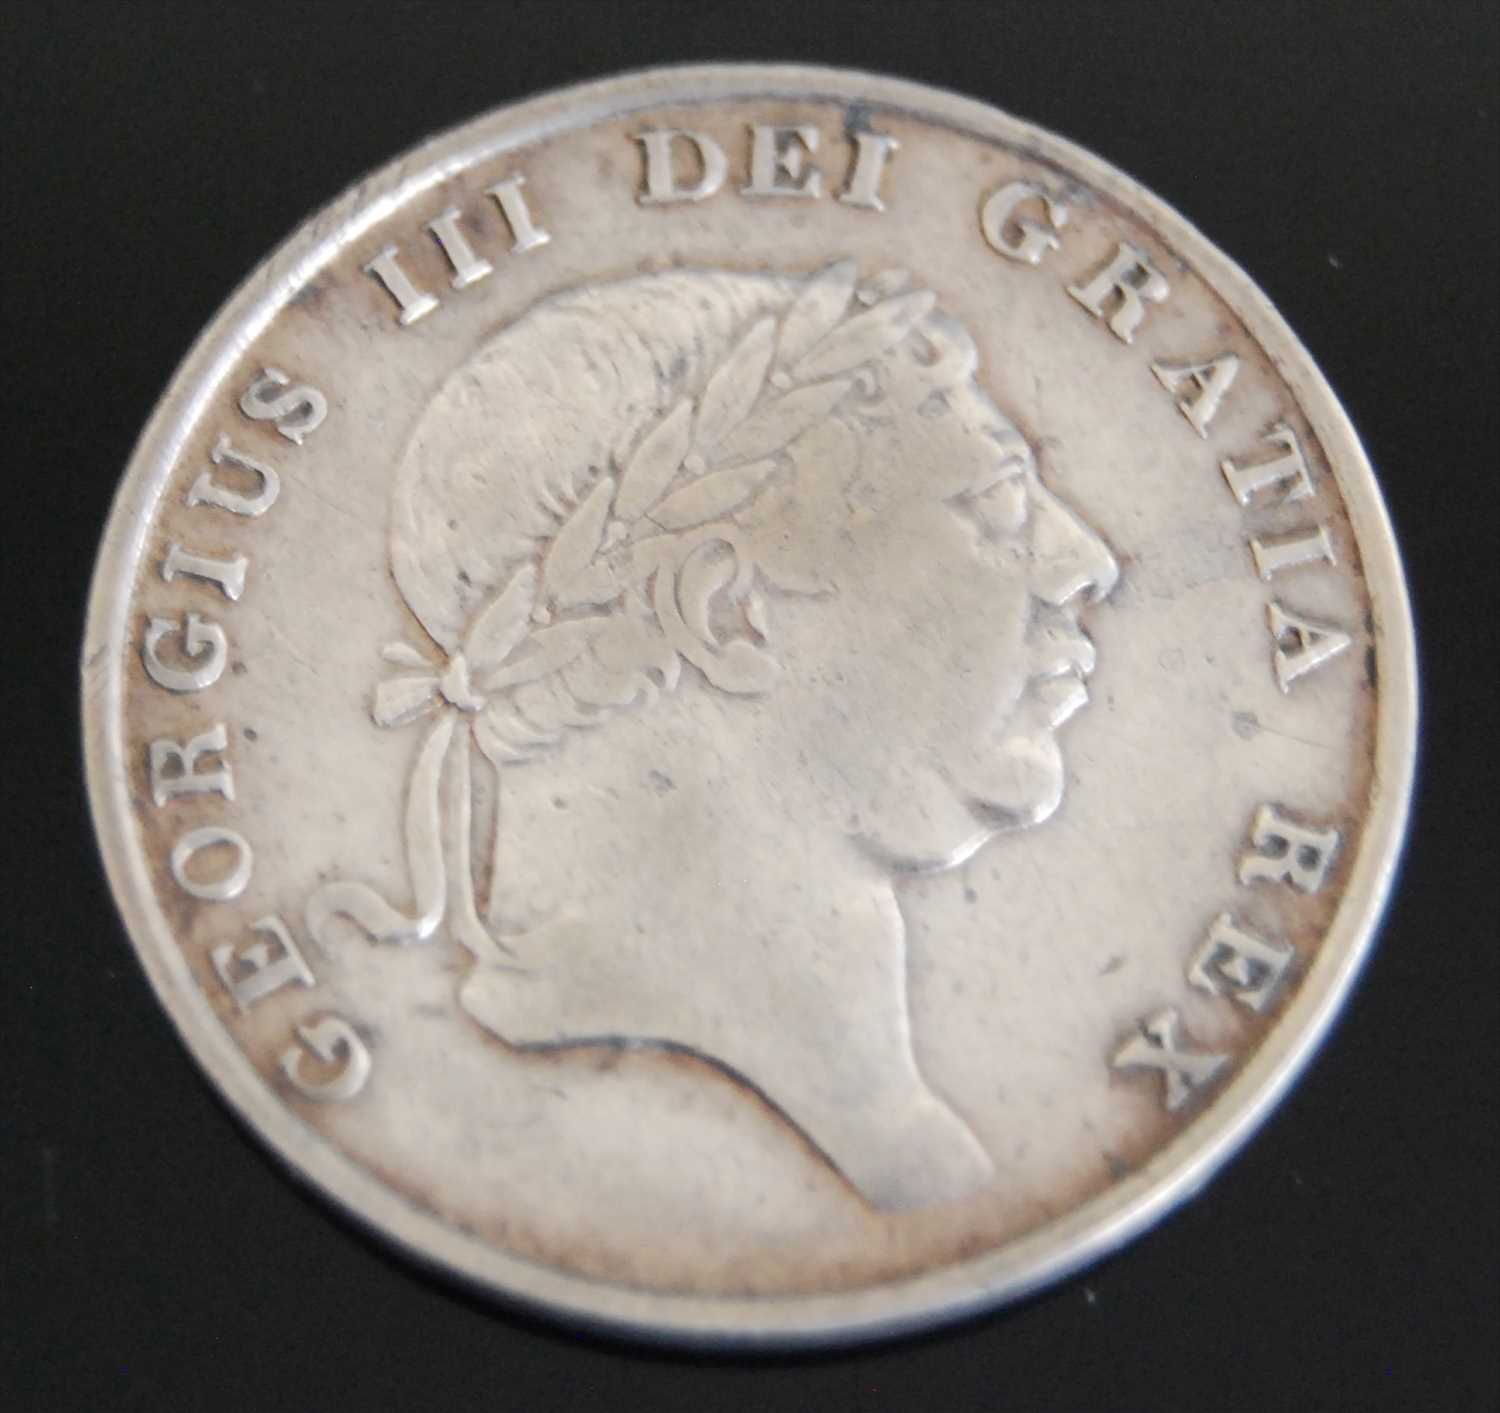 Lot 93 - Great Britain, 1813 1s 6d bank token